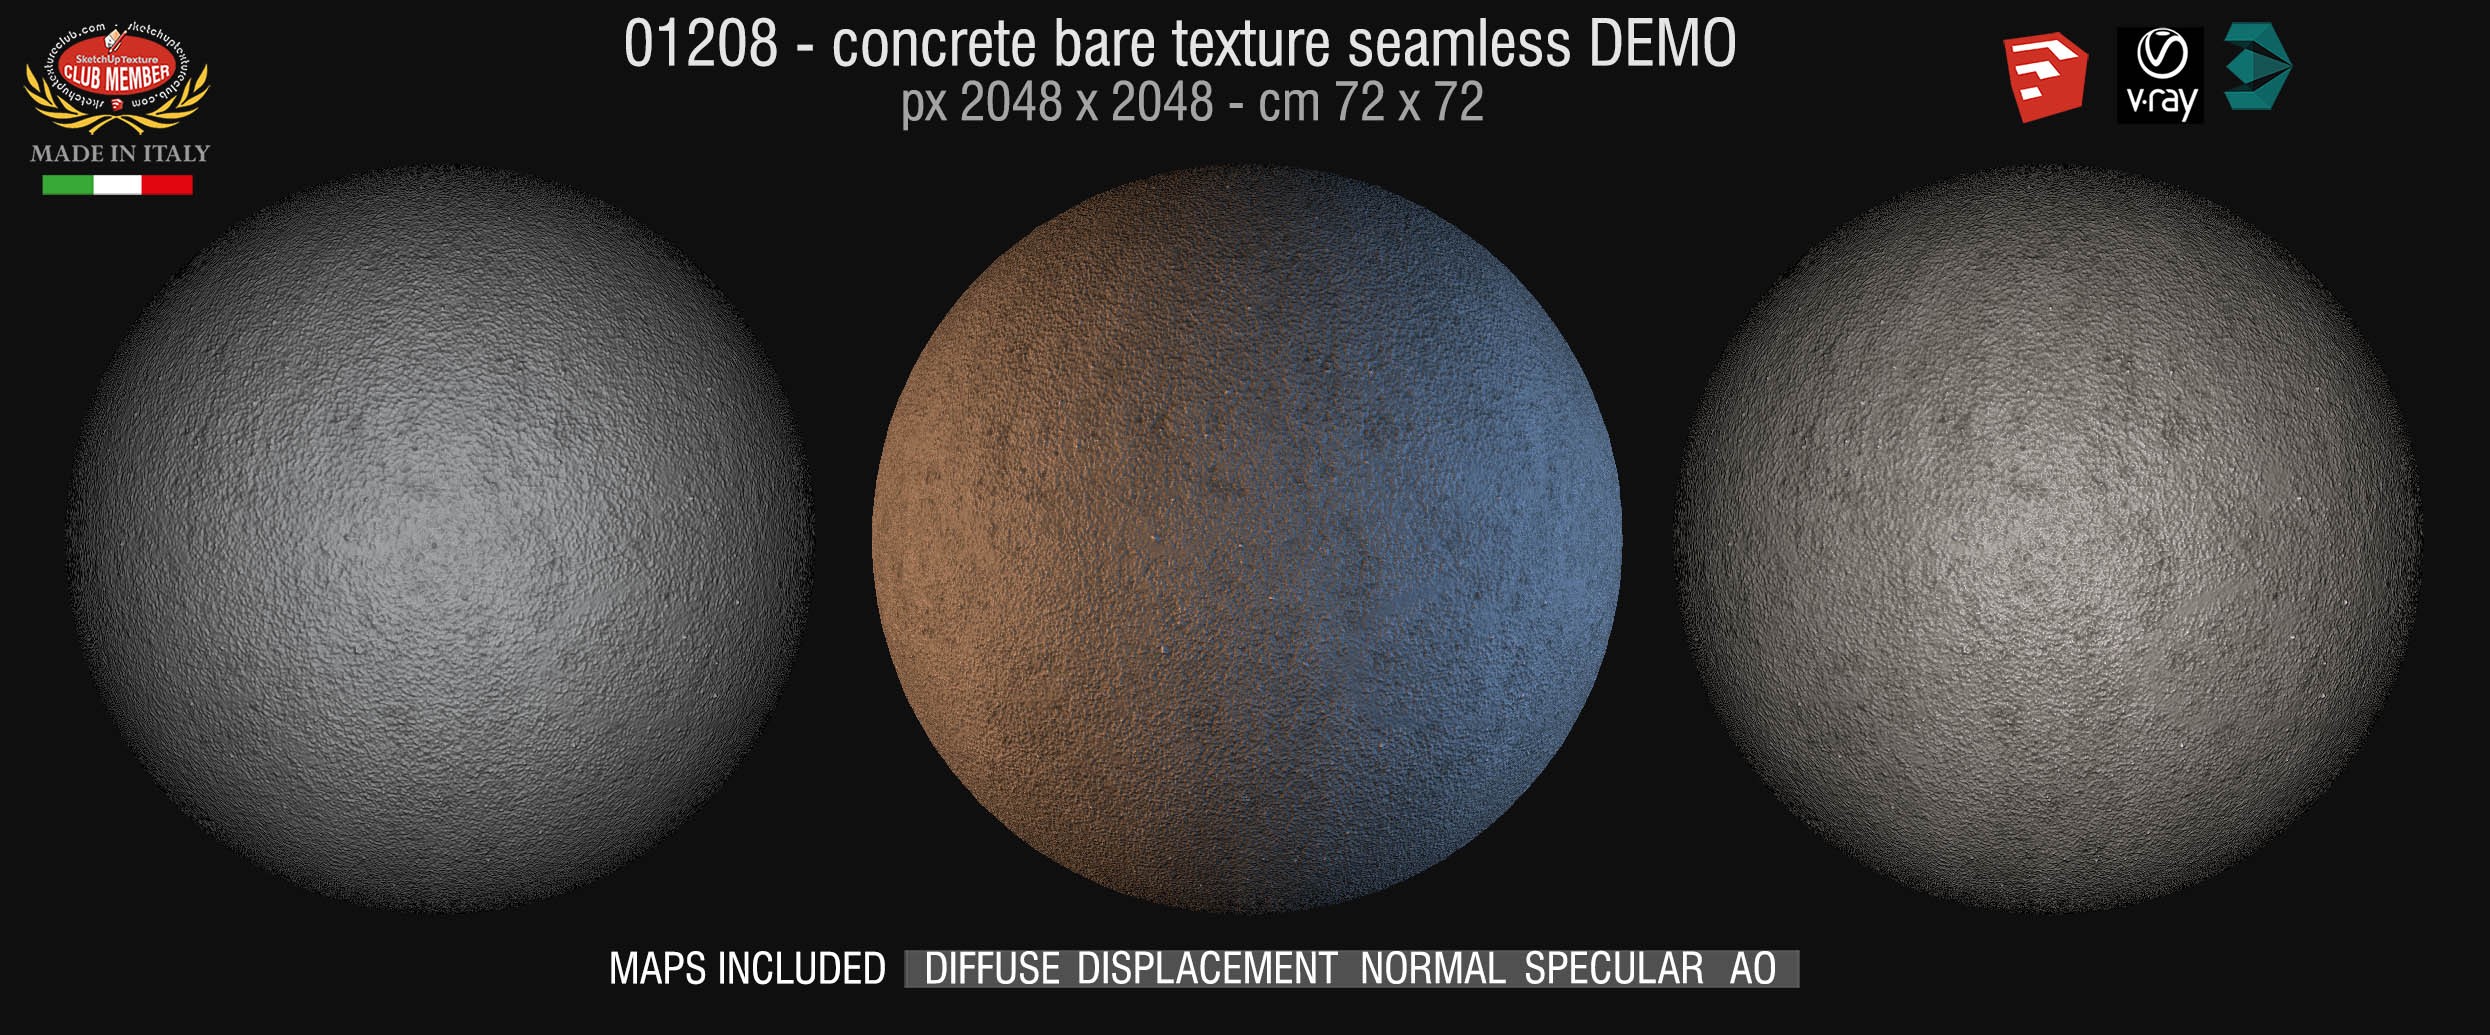 01208 HR Concrete bare clean texture + maps DEMO